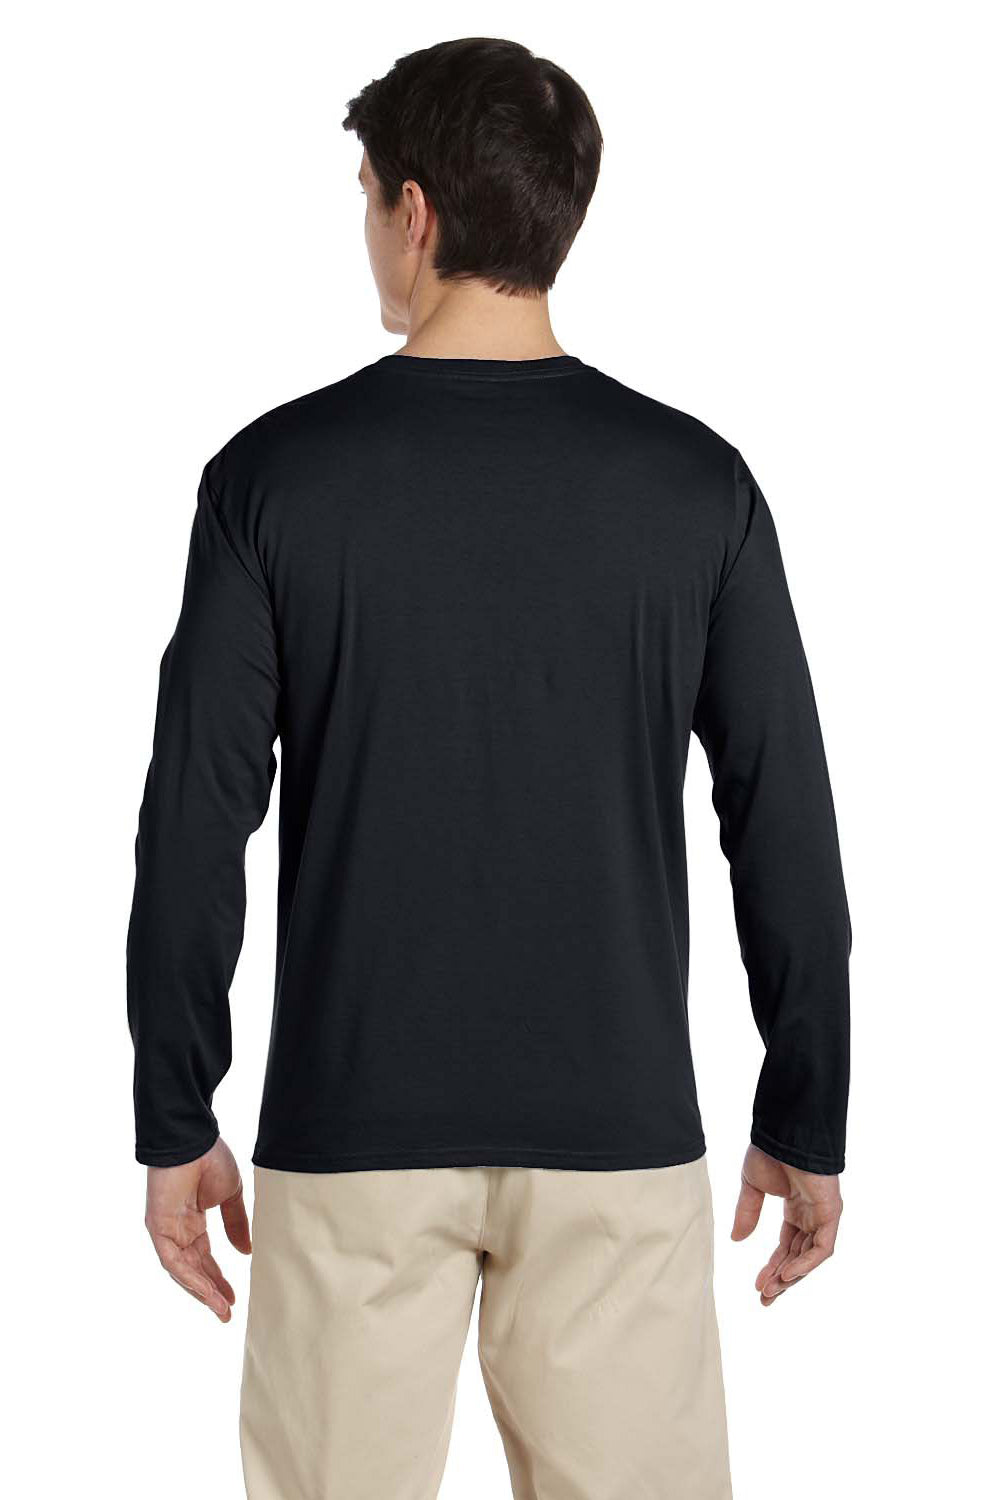 Gildan G644 Mens Softstyle Long Sleeve Crewneck T-Shirt Black Back